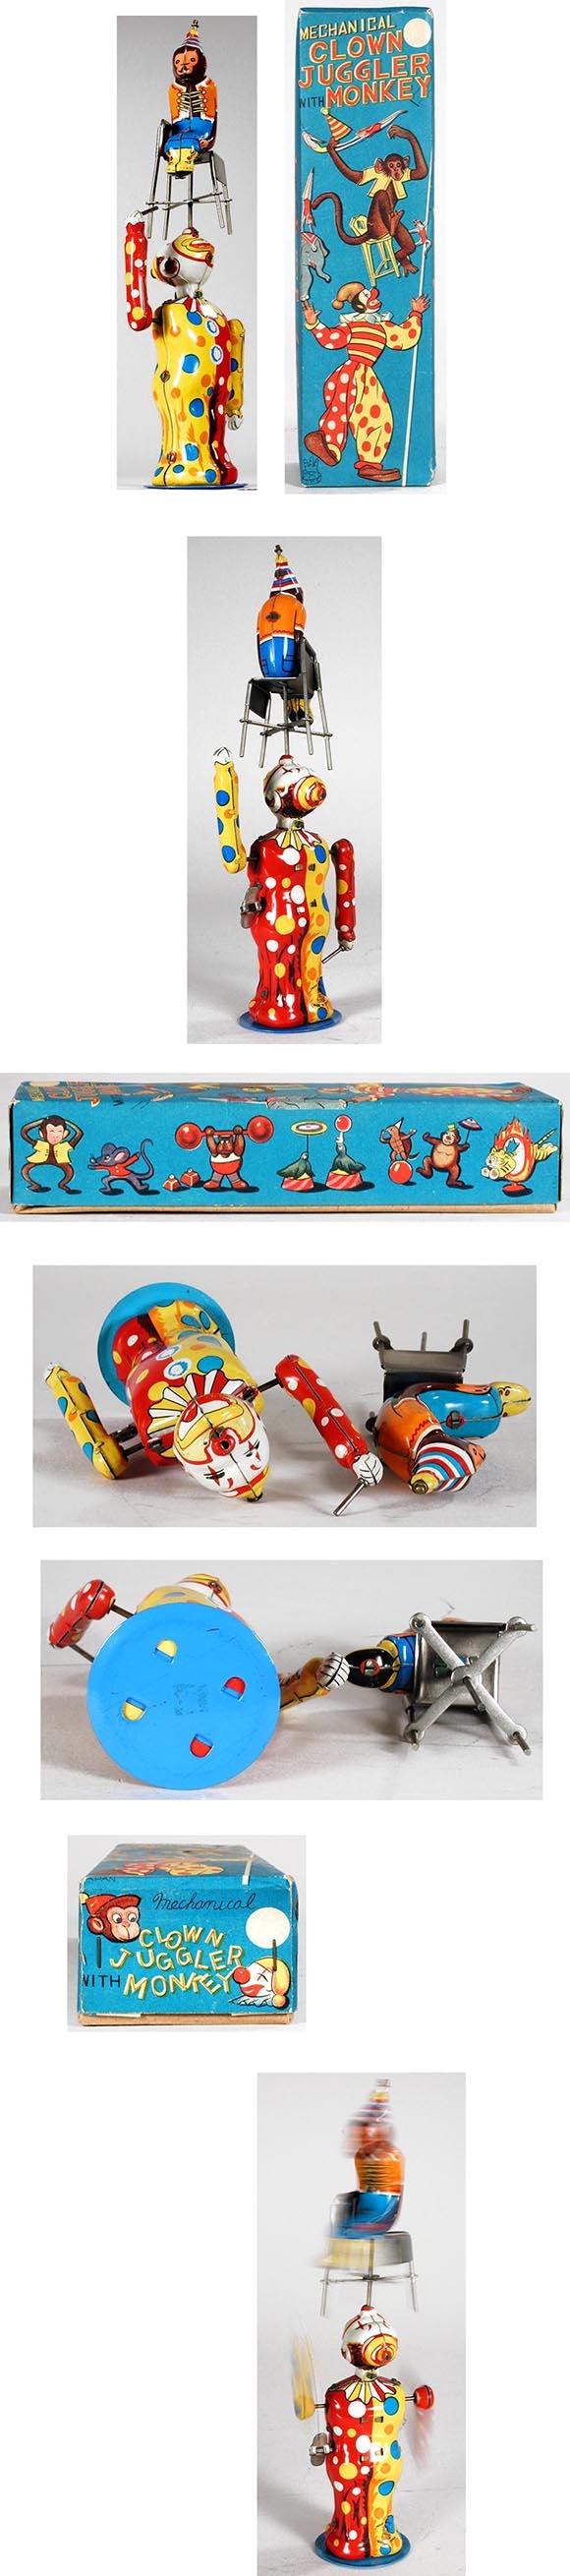 c.1959 T.P.S., Mechanical Clown Juggler with Monkey in Original Box